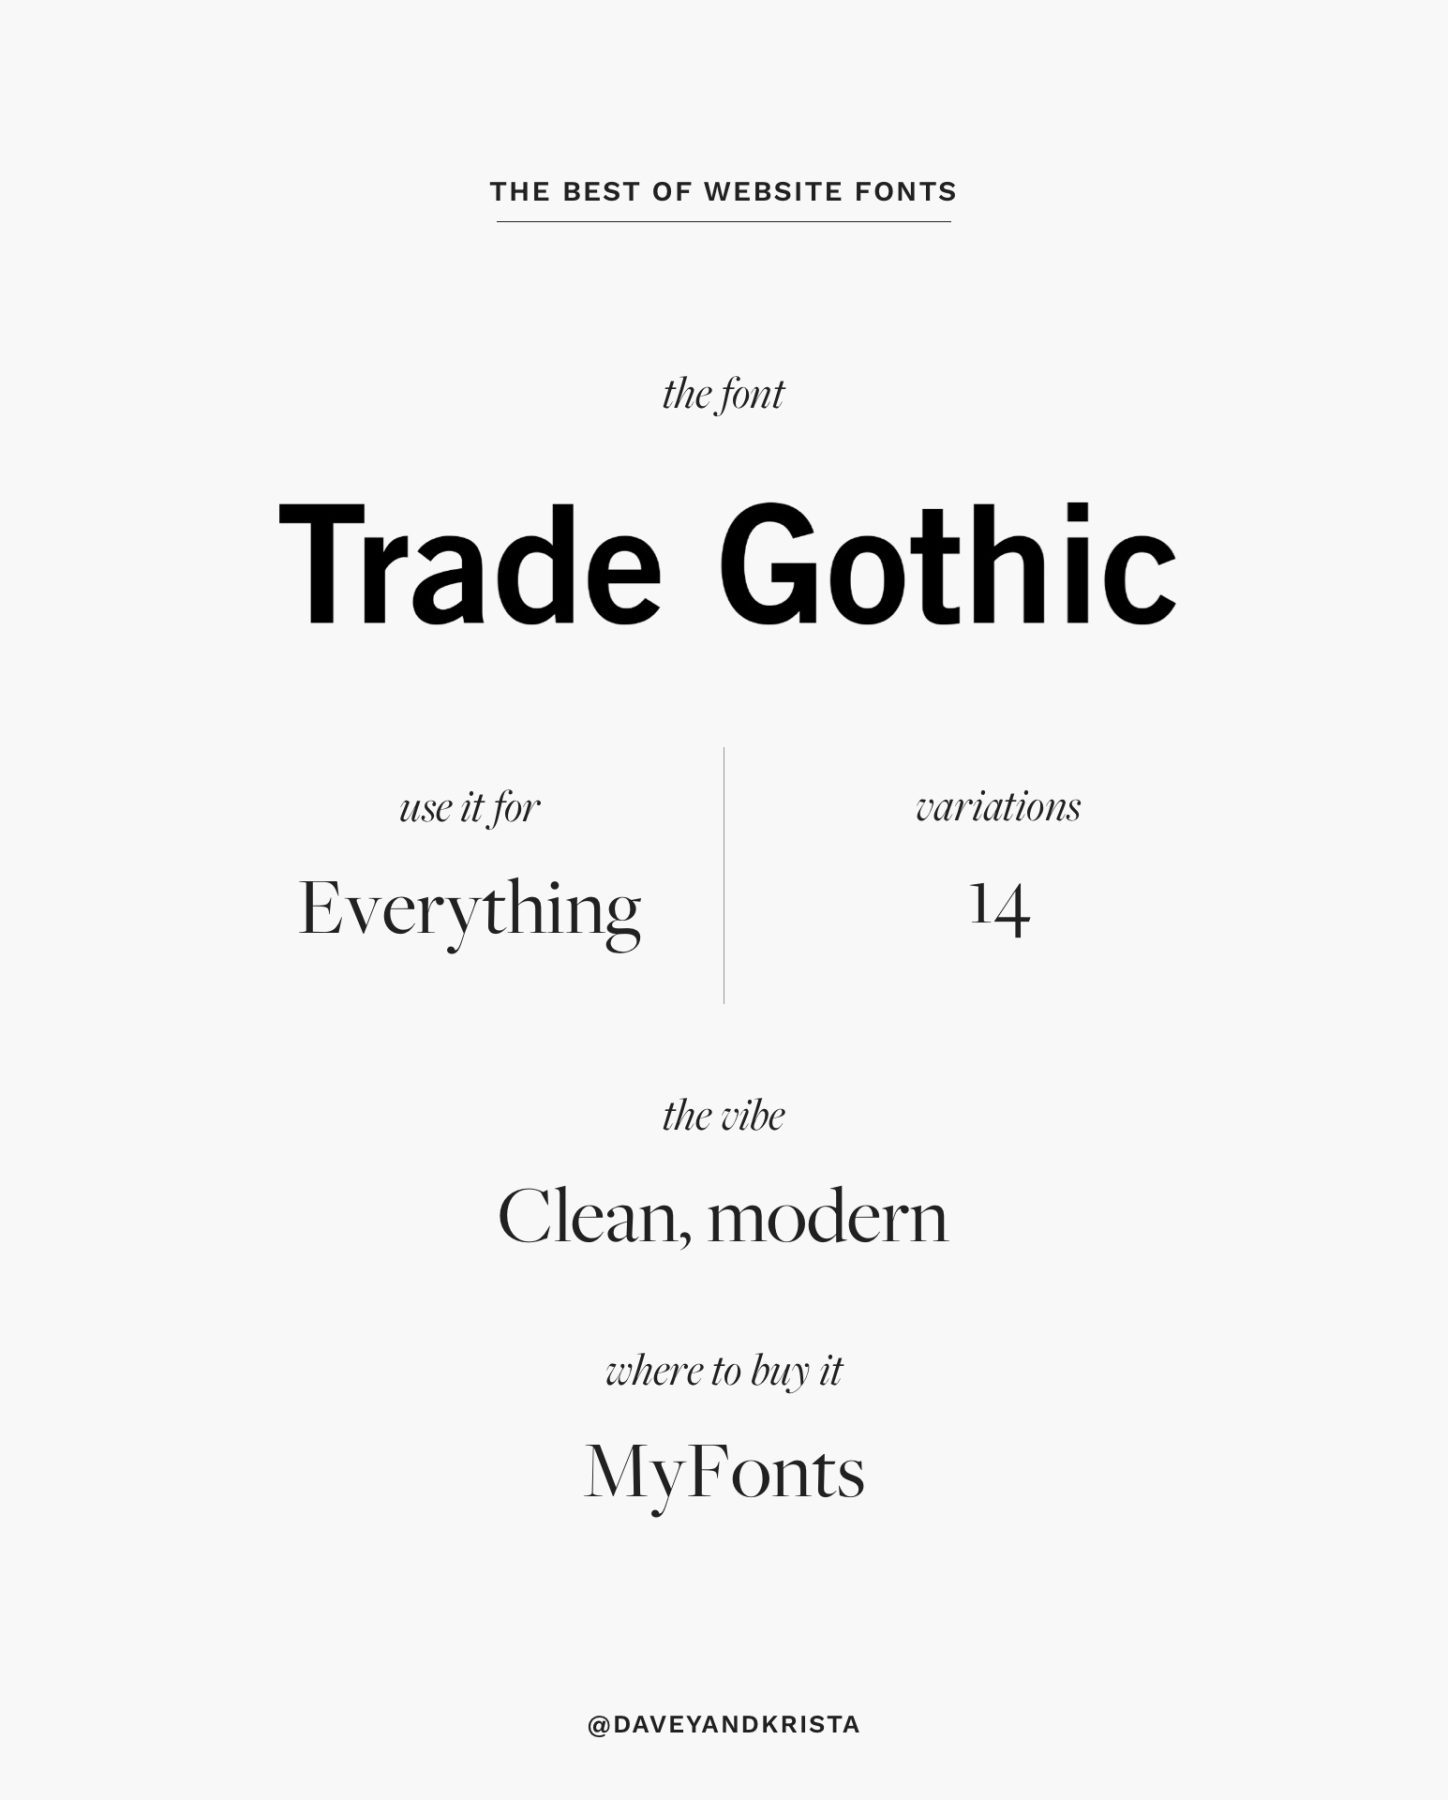 Trade Gothic font - a clean, modern sans serif for websites. | The Best Fonts for Websites